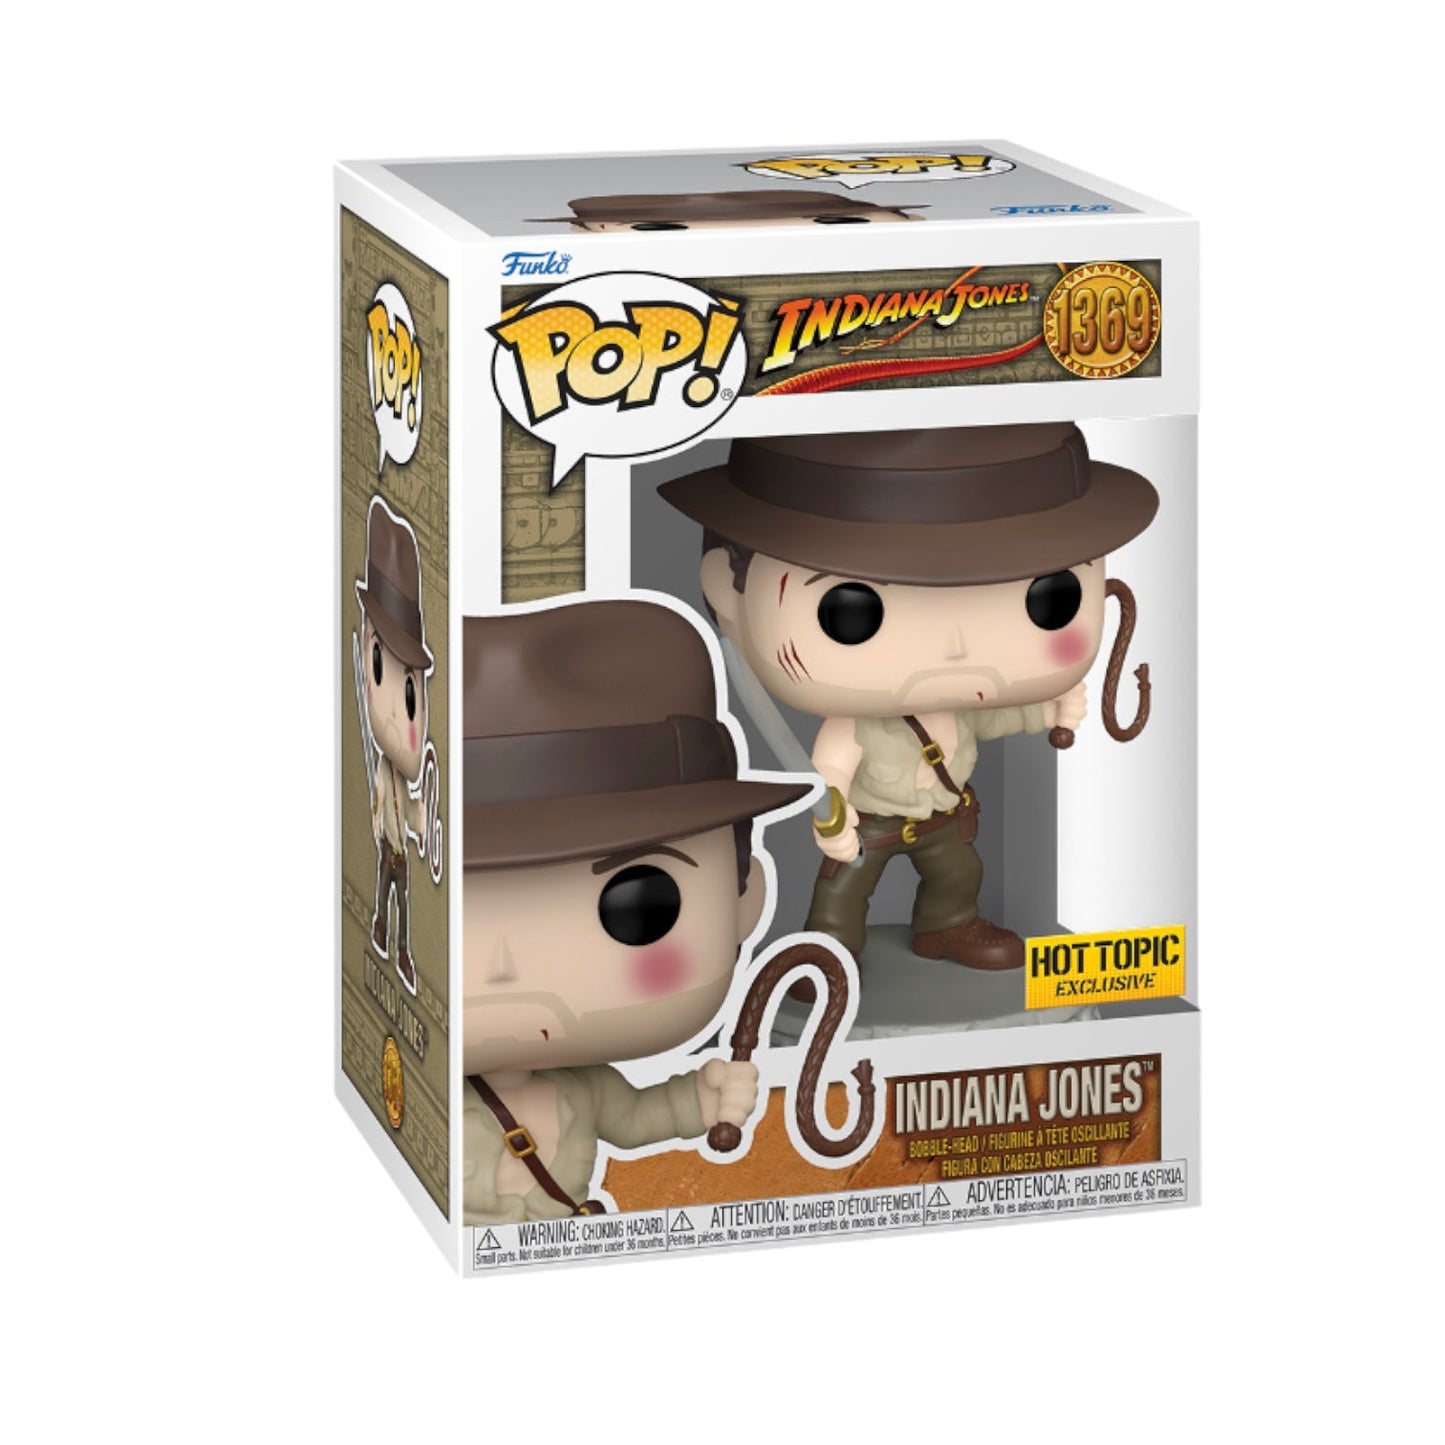 Indiana Jones #1369 (w/ Sword and Whip) Funko Pop! - Indiana Jones - Hot Topic Exclusive - Angry Cat